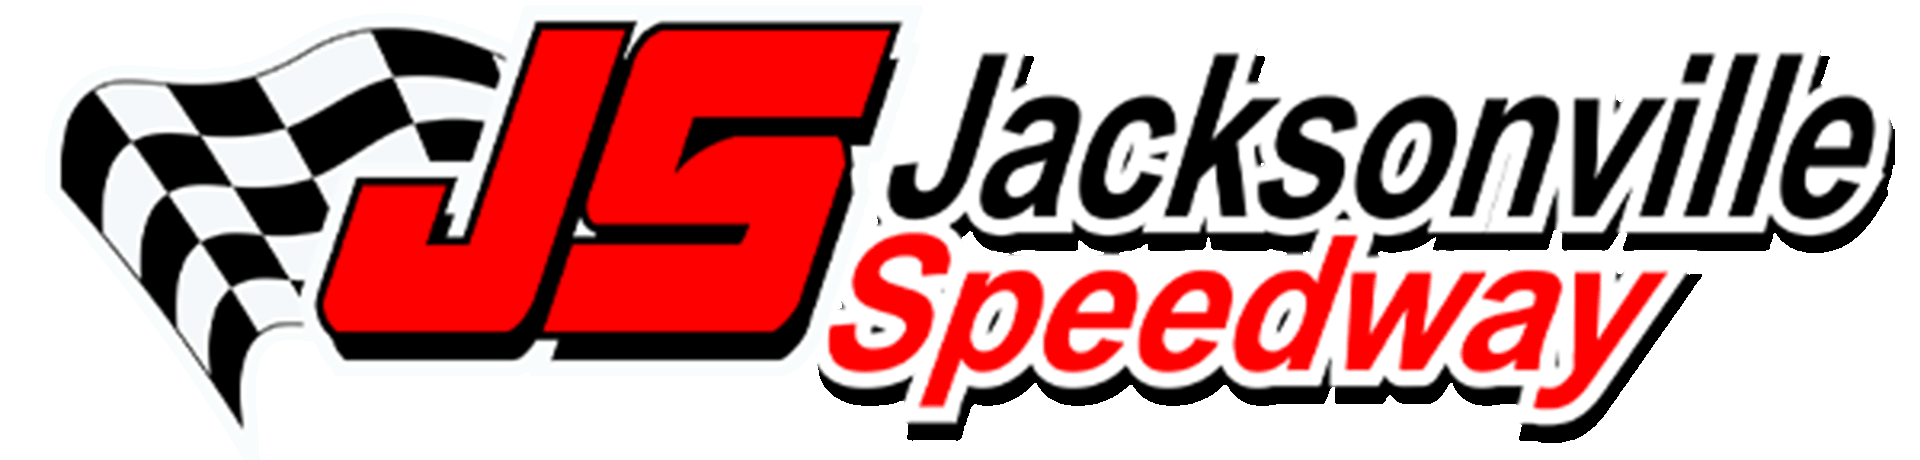 Jacksonville Speedway Logo